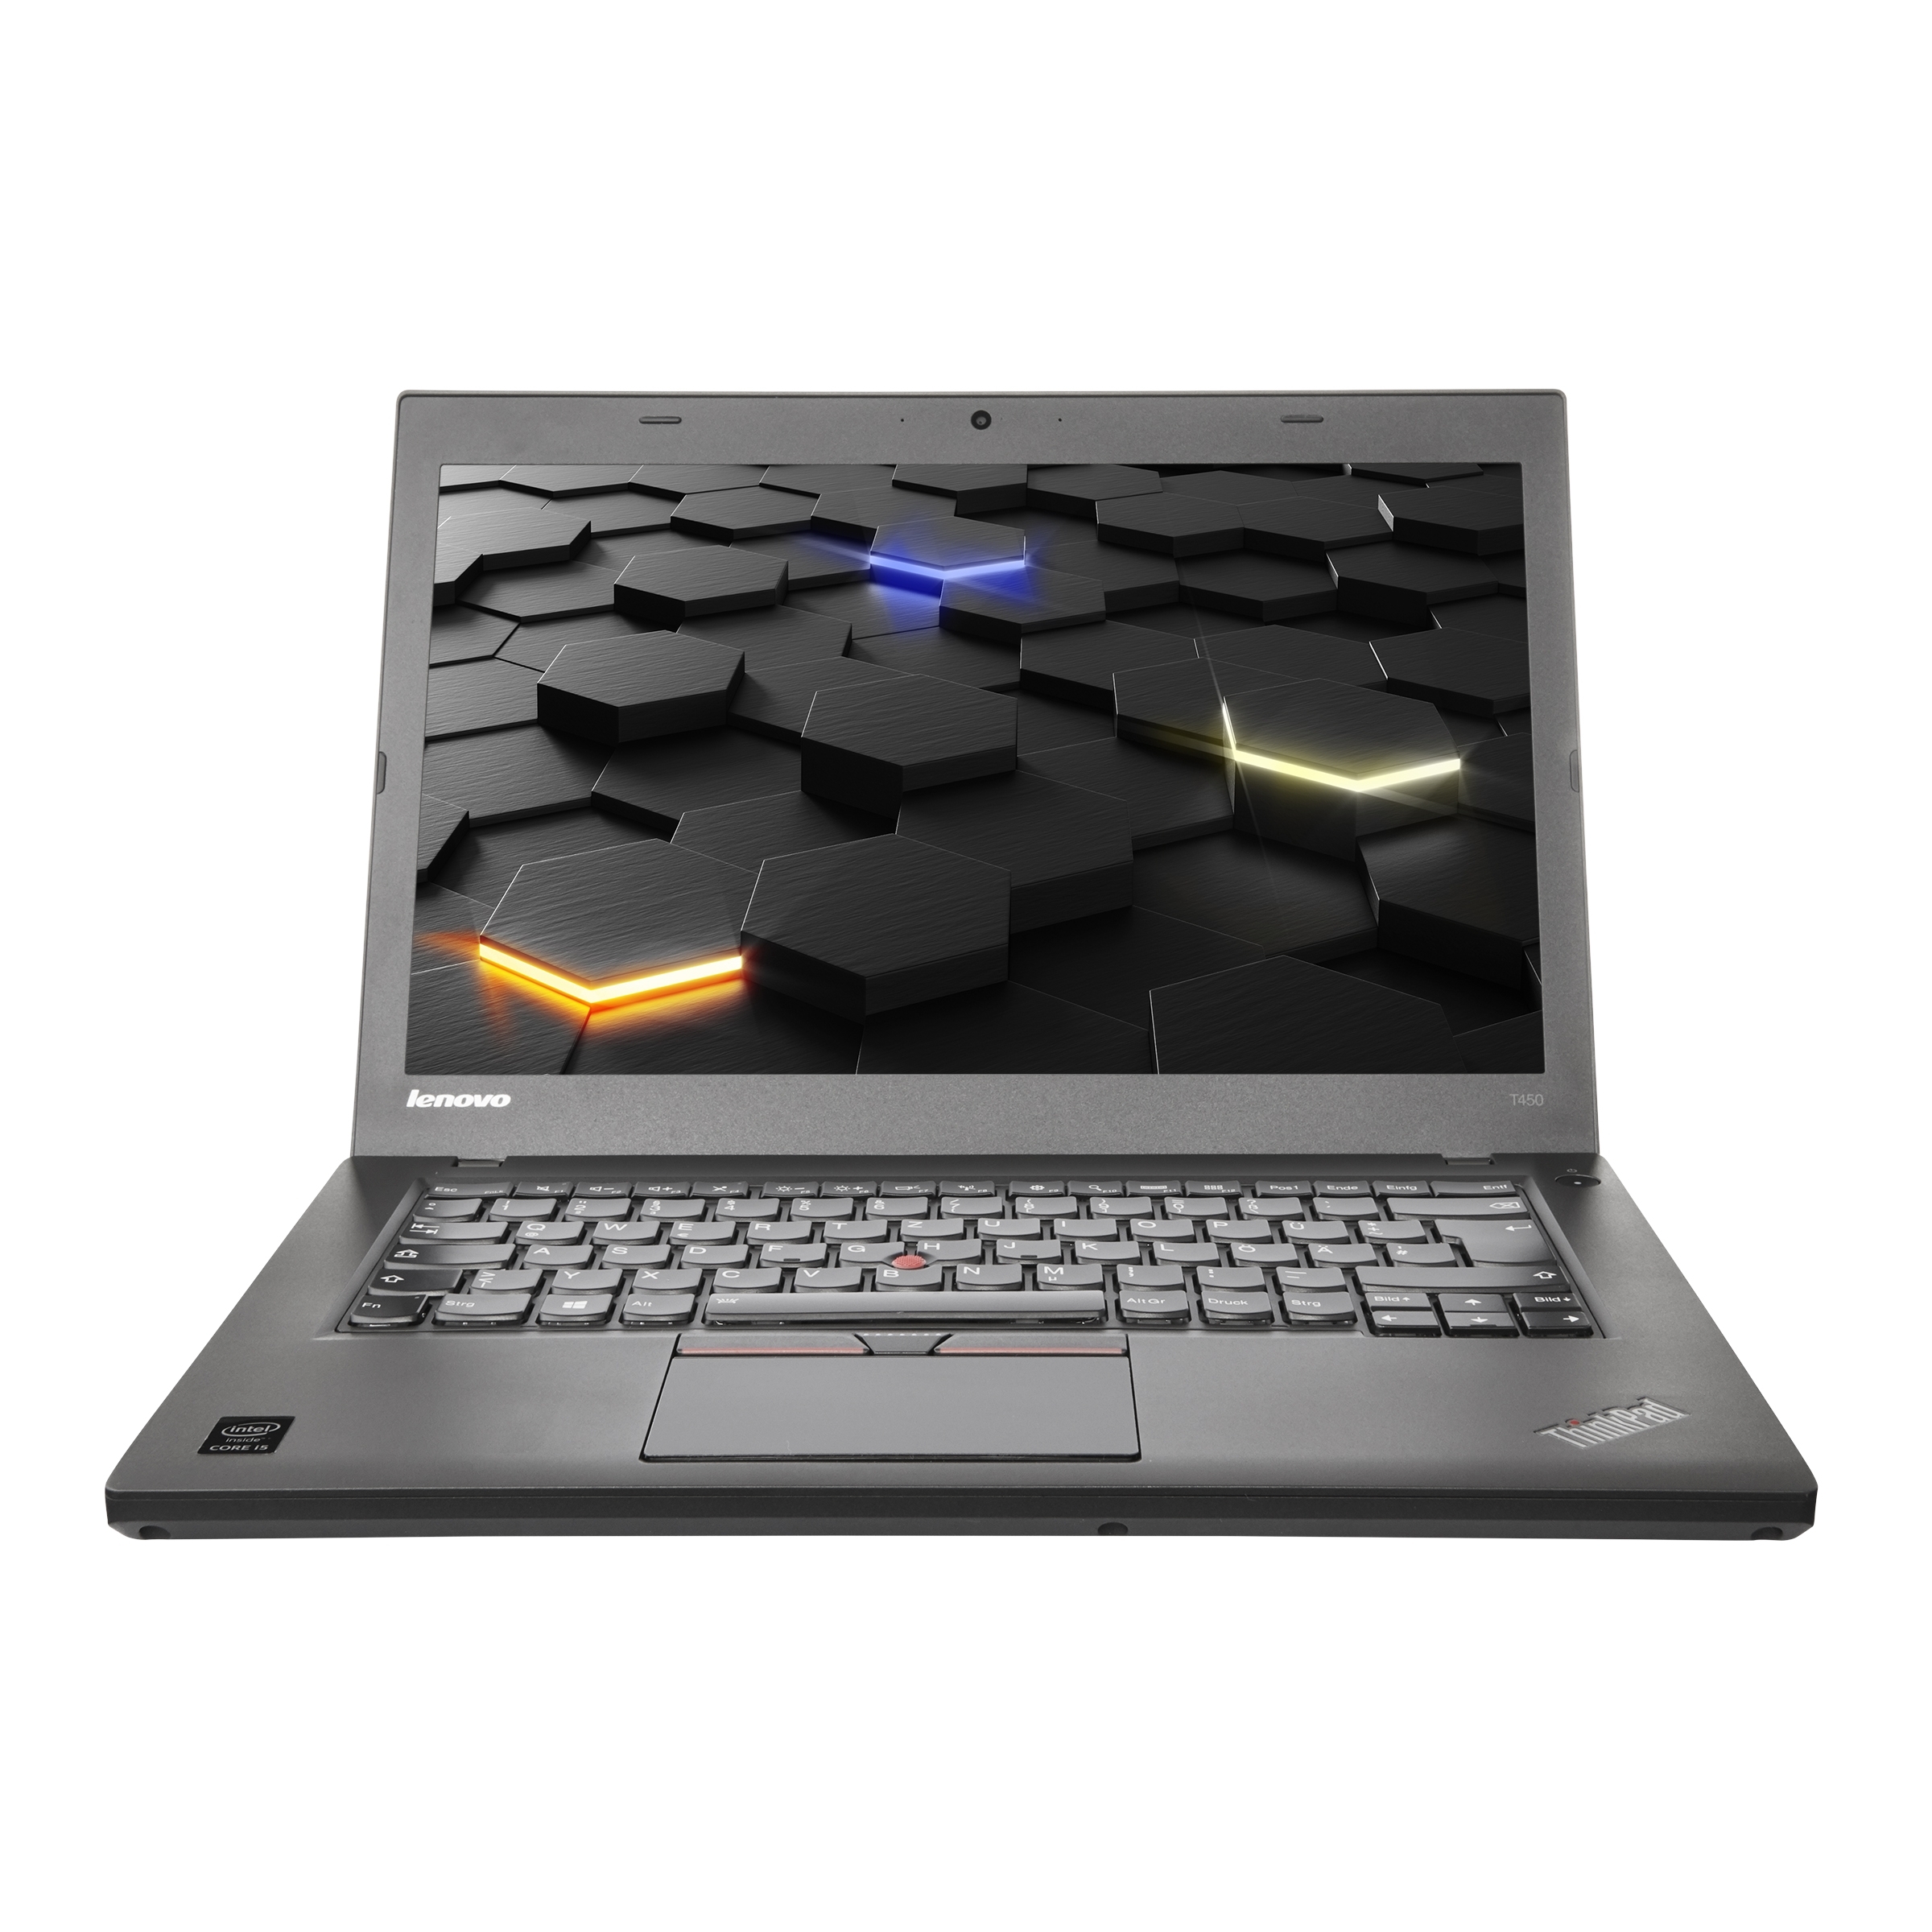 Lenovo ThinkPad T450, i7 (5.Gen), 14 Zoll, HD+, 8GB, 250GB SSD, Webcam, beleuchtete Tastatur, LTE, Windows 10 Pro, Zustand: Sehr gut